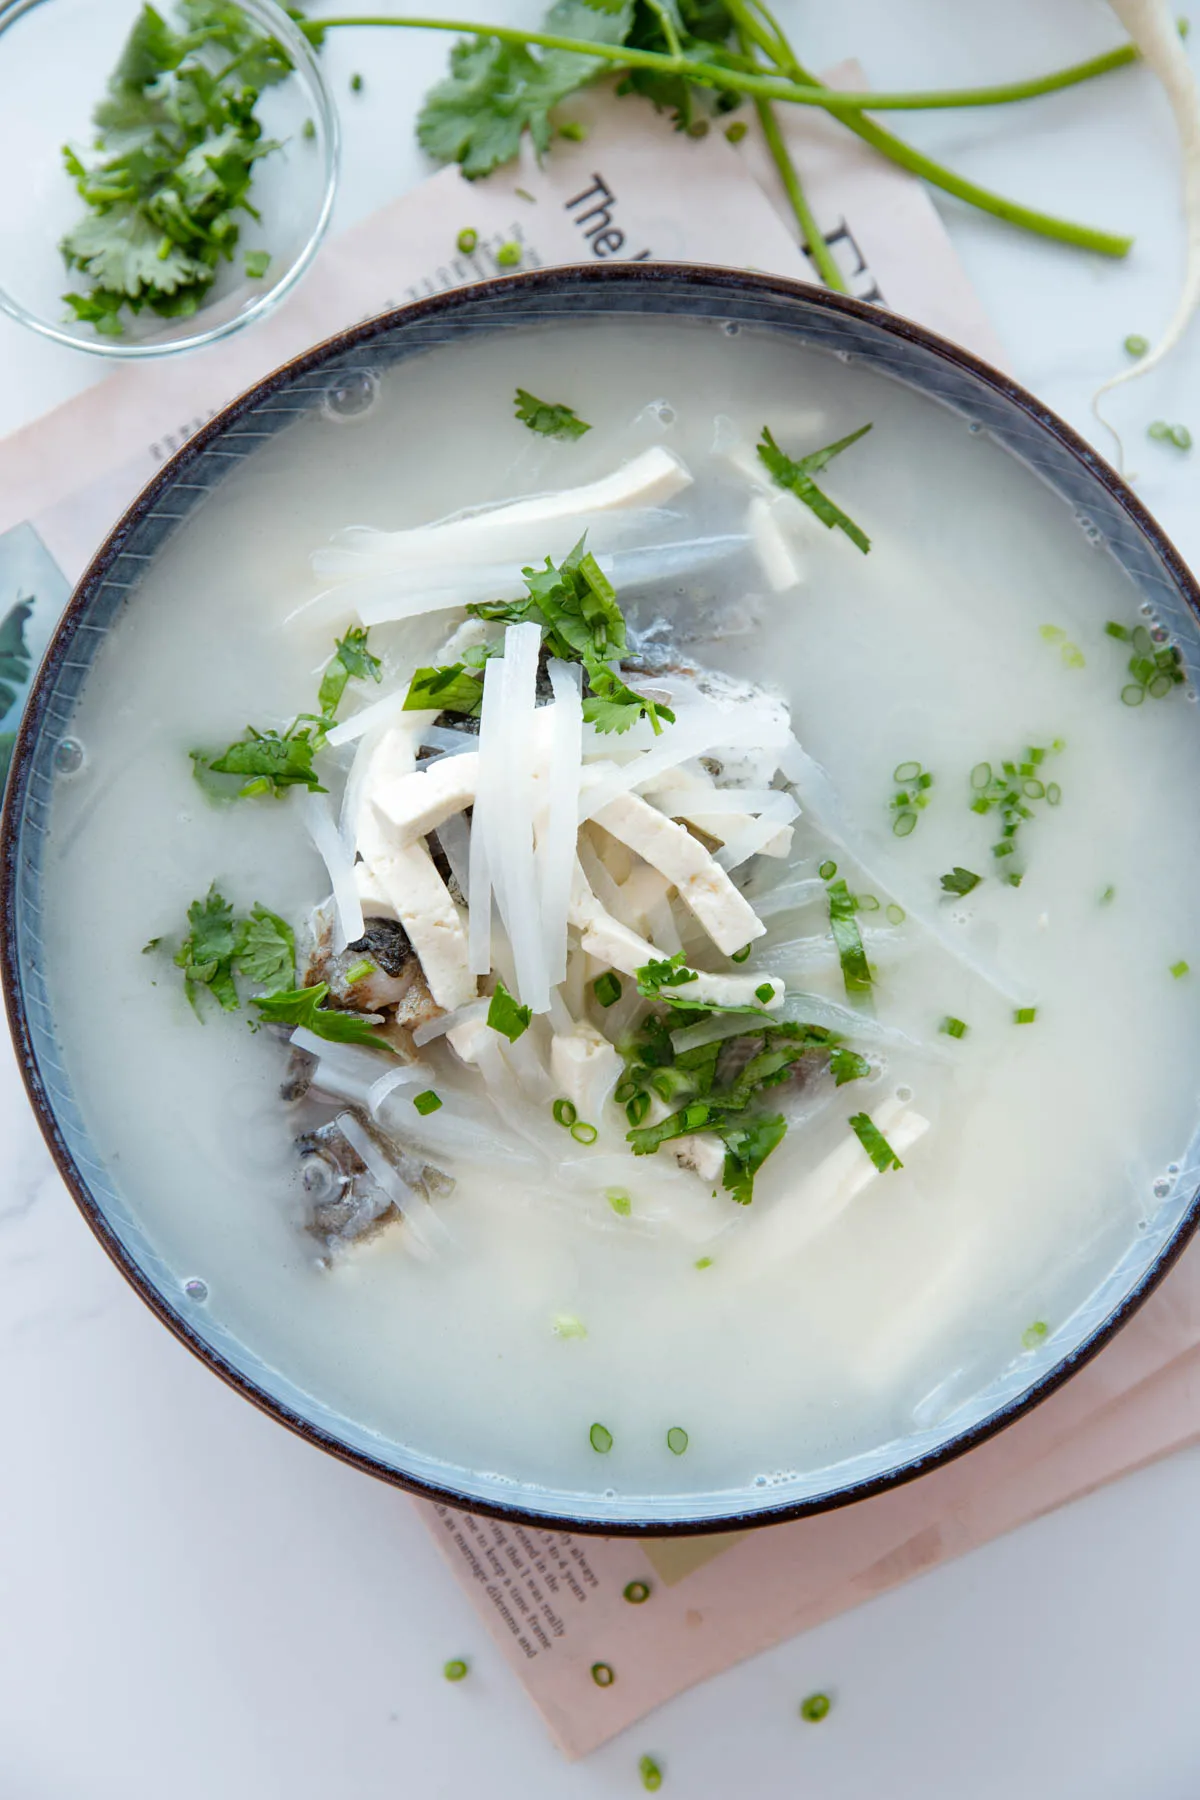 Chinese Fish Soup